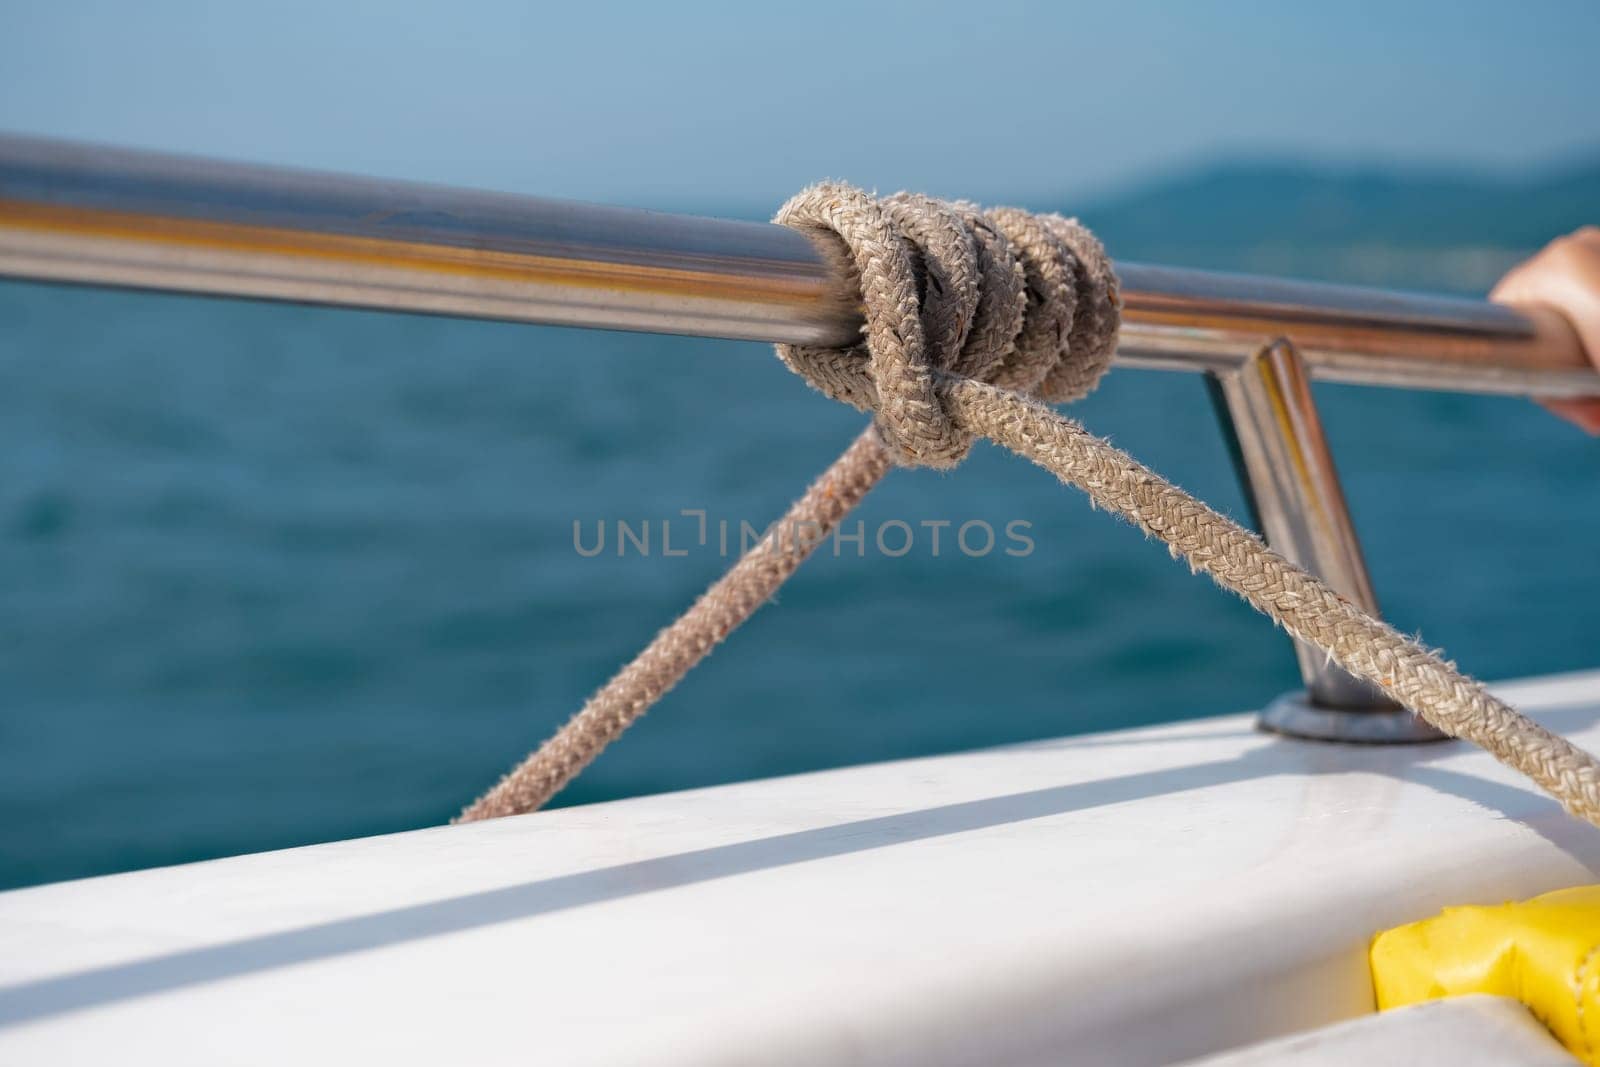 Marine knot detail on stainless steel boat railing banister.